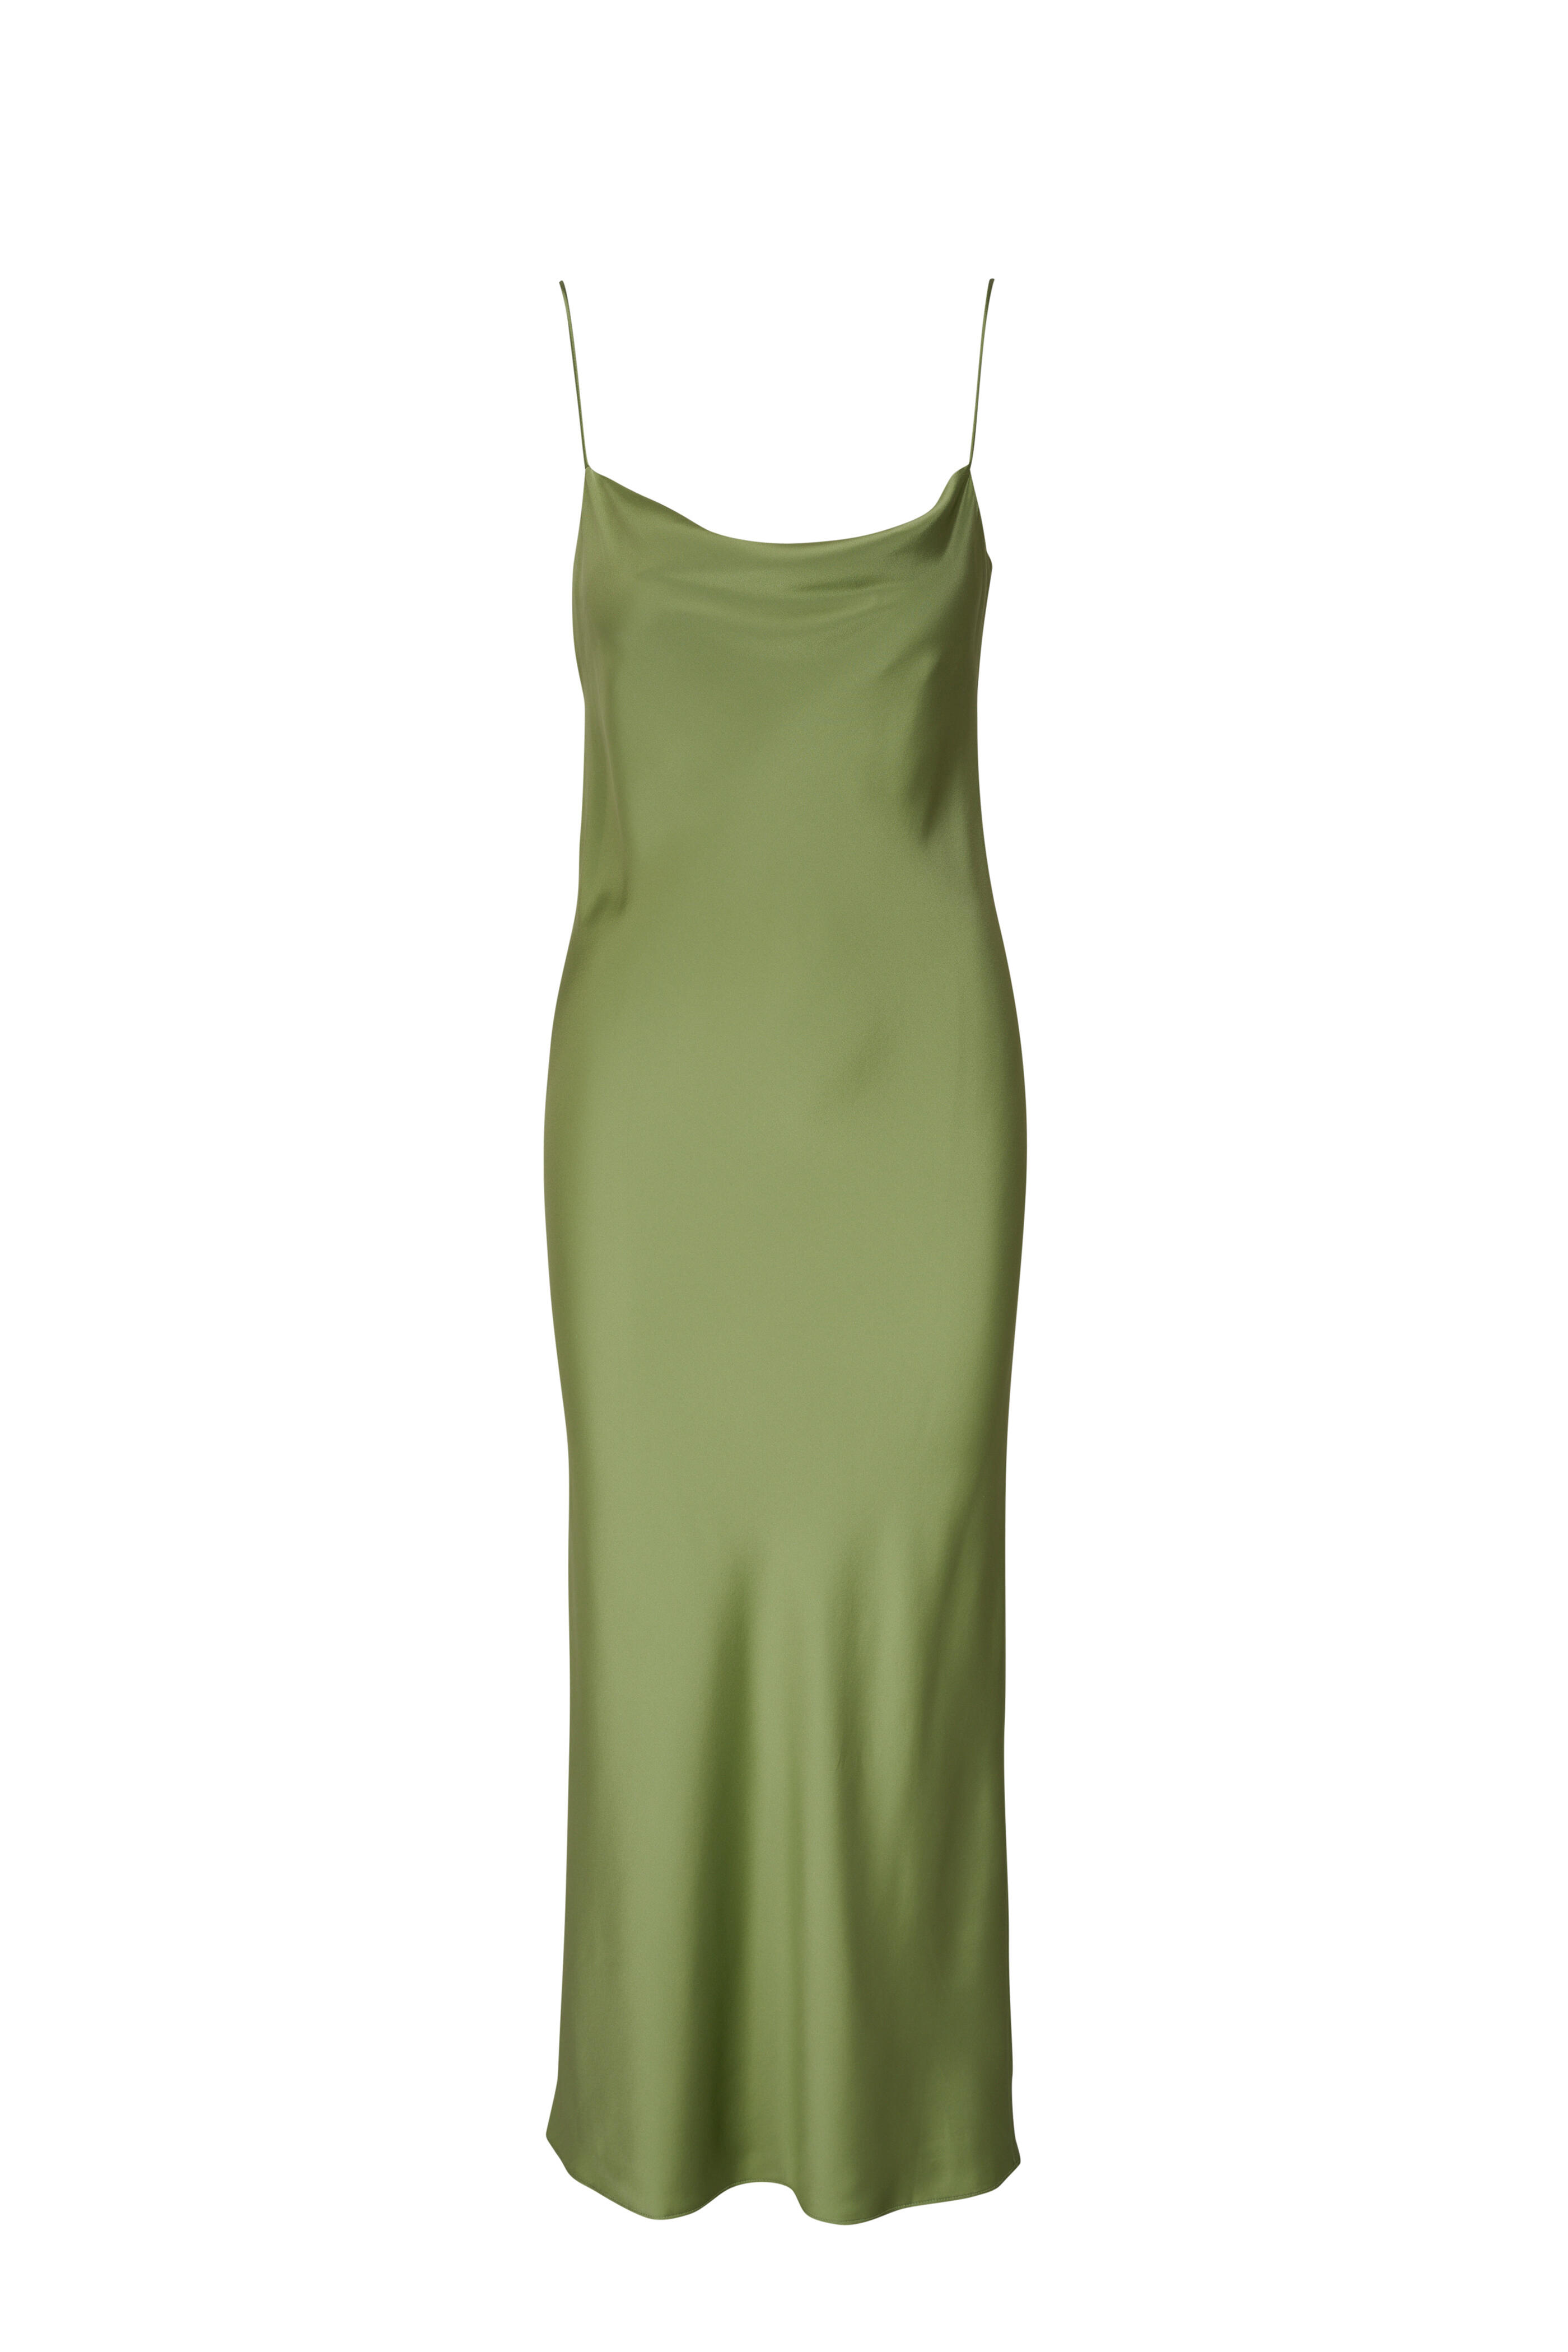 Dorothee Schumacher - Shiny Statement Green Silk Maxi Dress